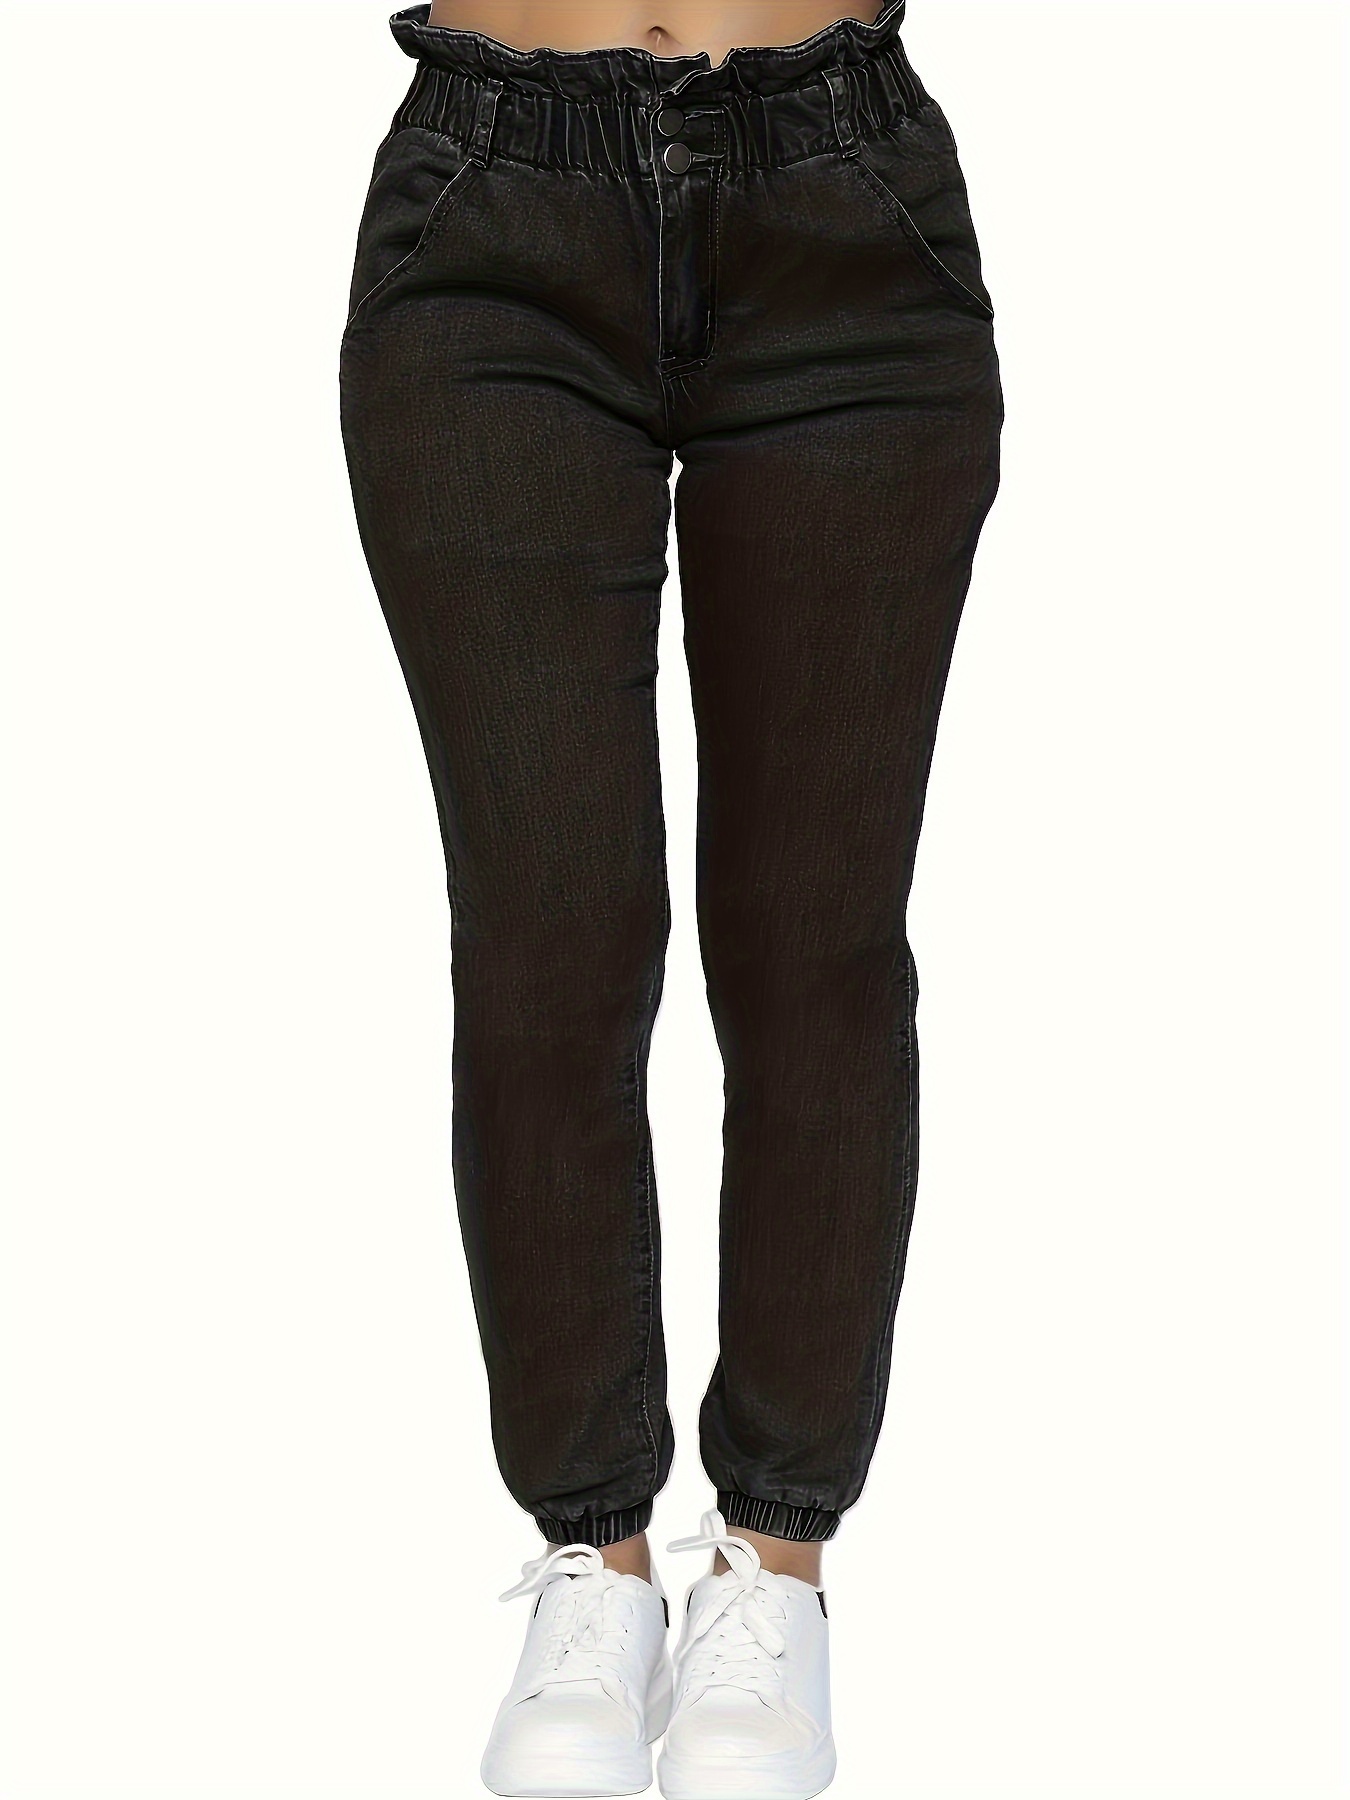 Black Ruffle Trim Elastic Waistband Jogger Jeans, Slant Pocket Slim Fitted  Casual Denim Pants, Women's Denim Jeans & Clothing